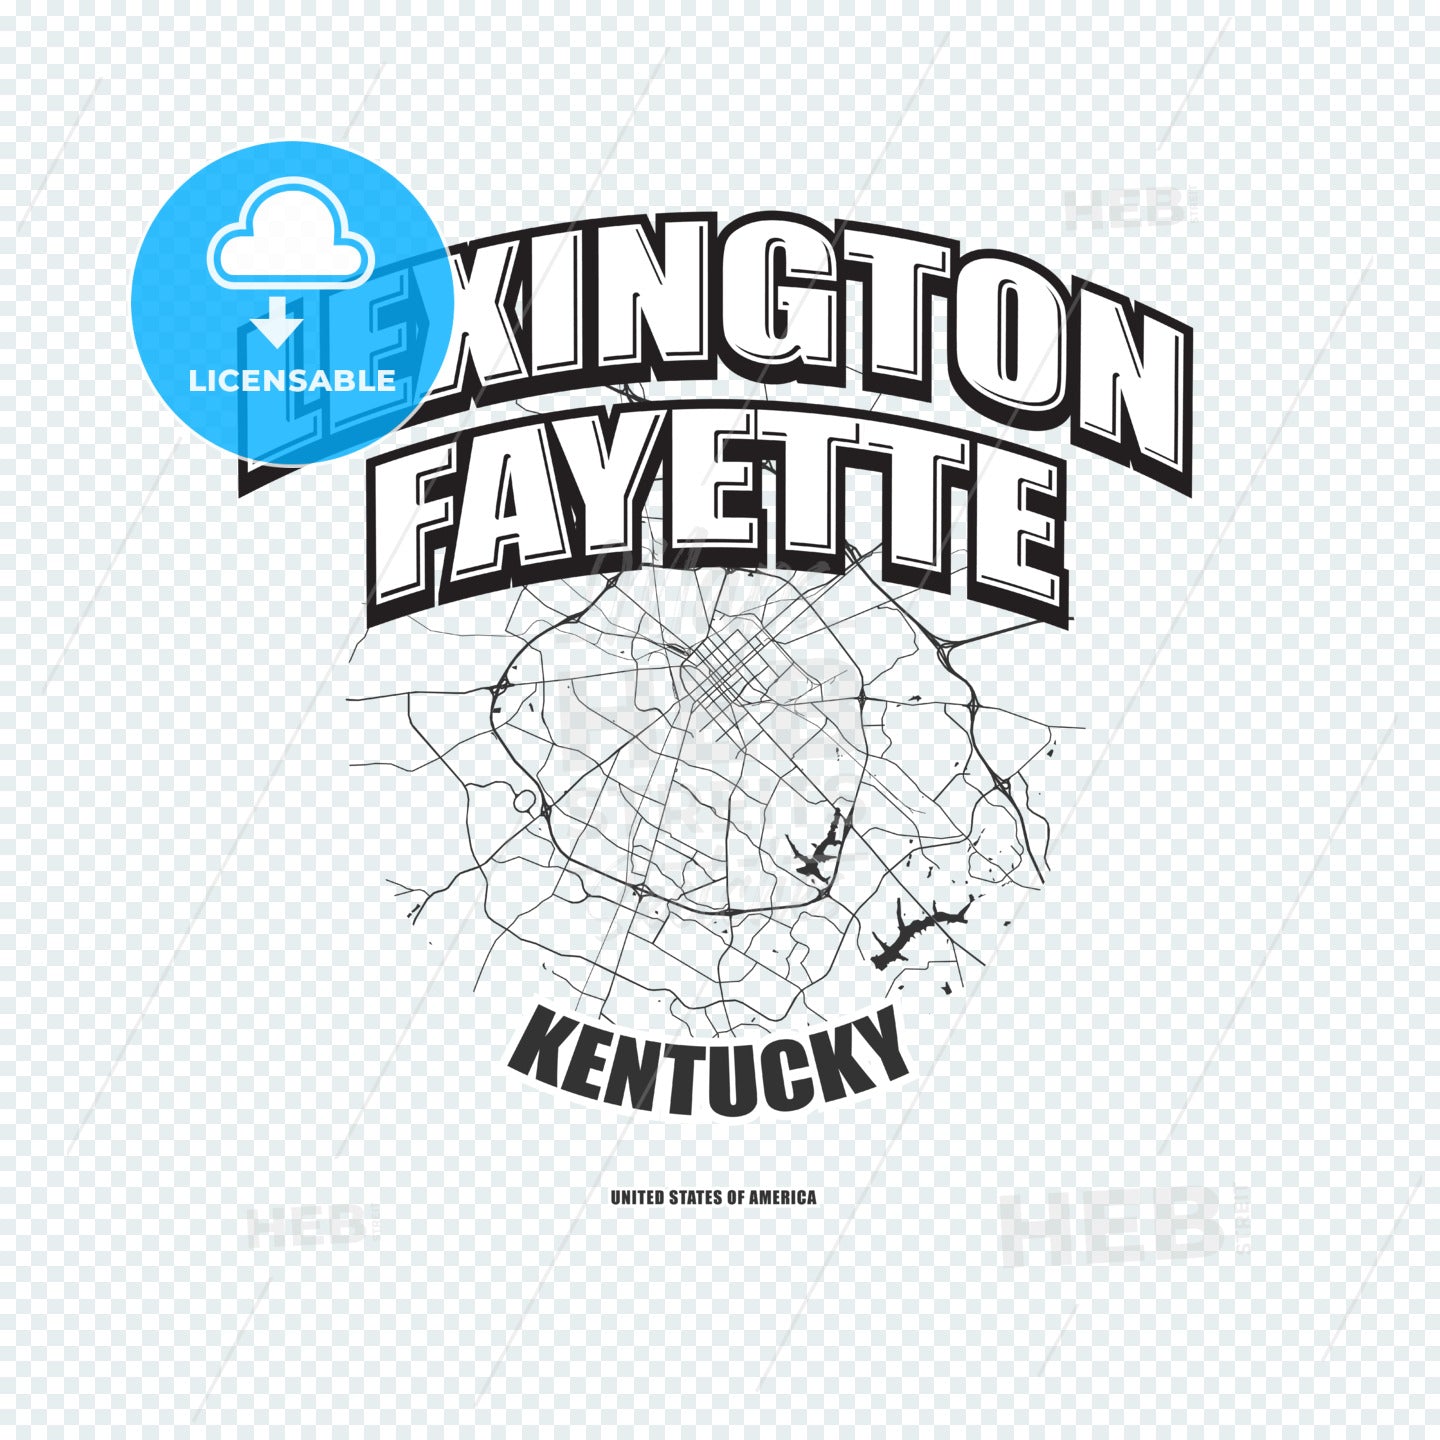 Lexington, Kentucky, logo artwork – instant download